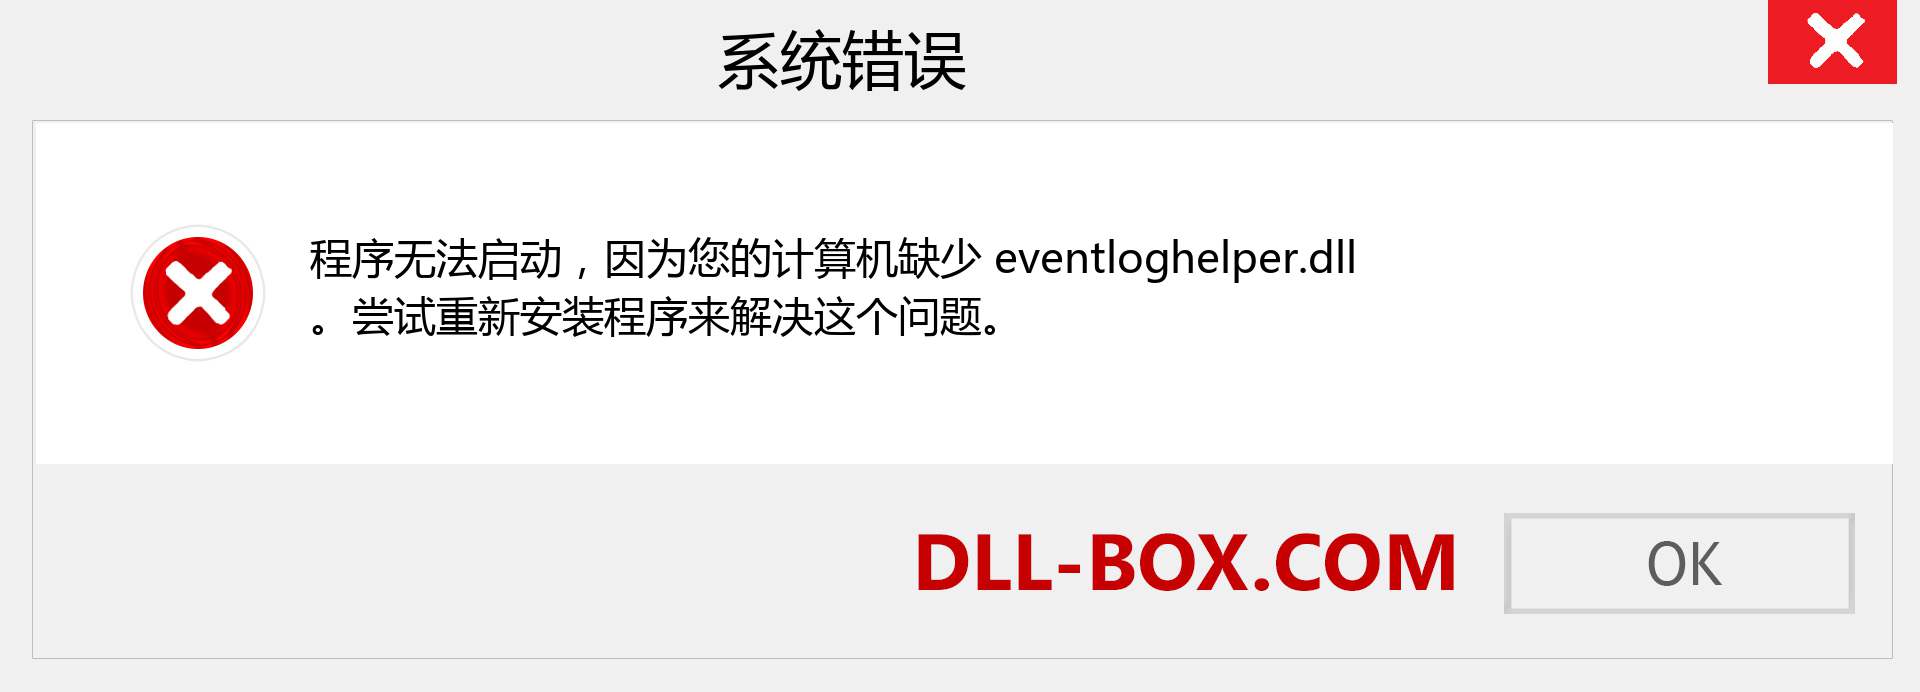 eventloghelper.dll 文件丢失？。 适用于 Windows 7、8、10 的下载 - 修复 Windows、照片、图像上的 eventloghelper dll 丢失错误